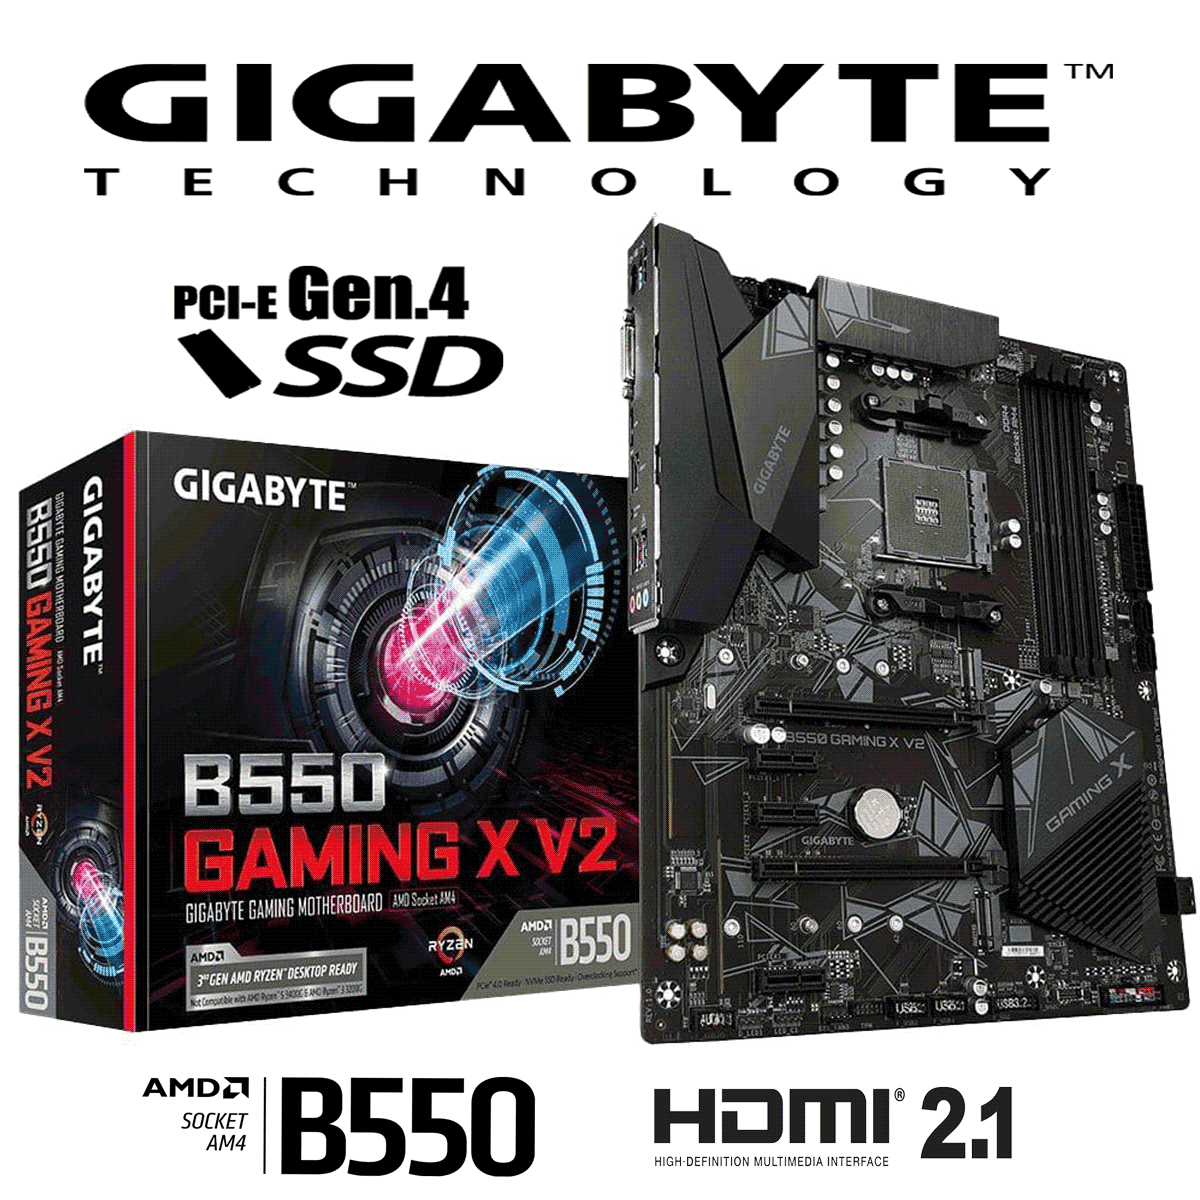 PC Bundle • AMD Ryzen 5 5600G • GIGABYTE B550 Gaming X V2 • 16GB DDR4-3200 Ram 